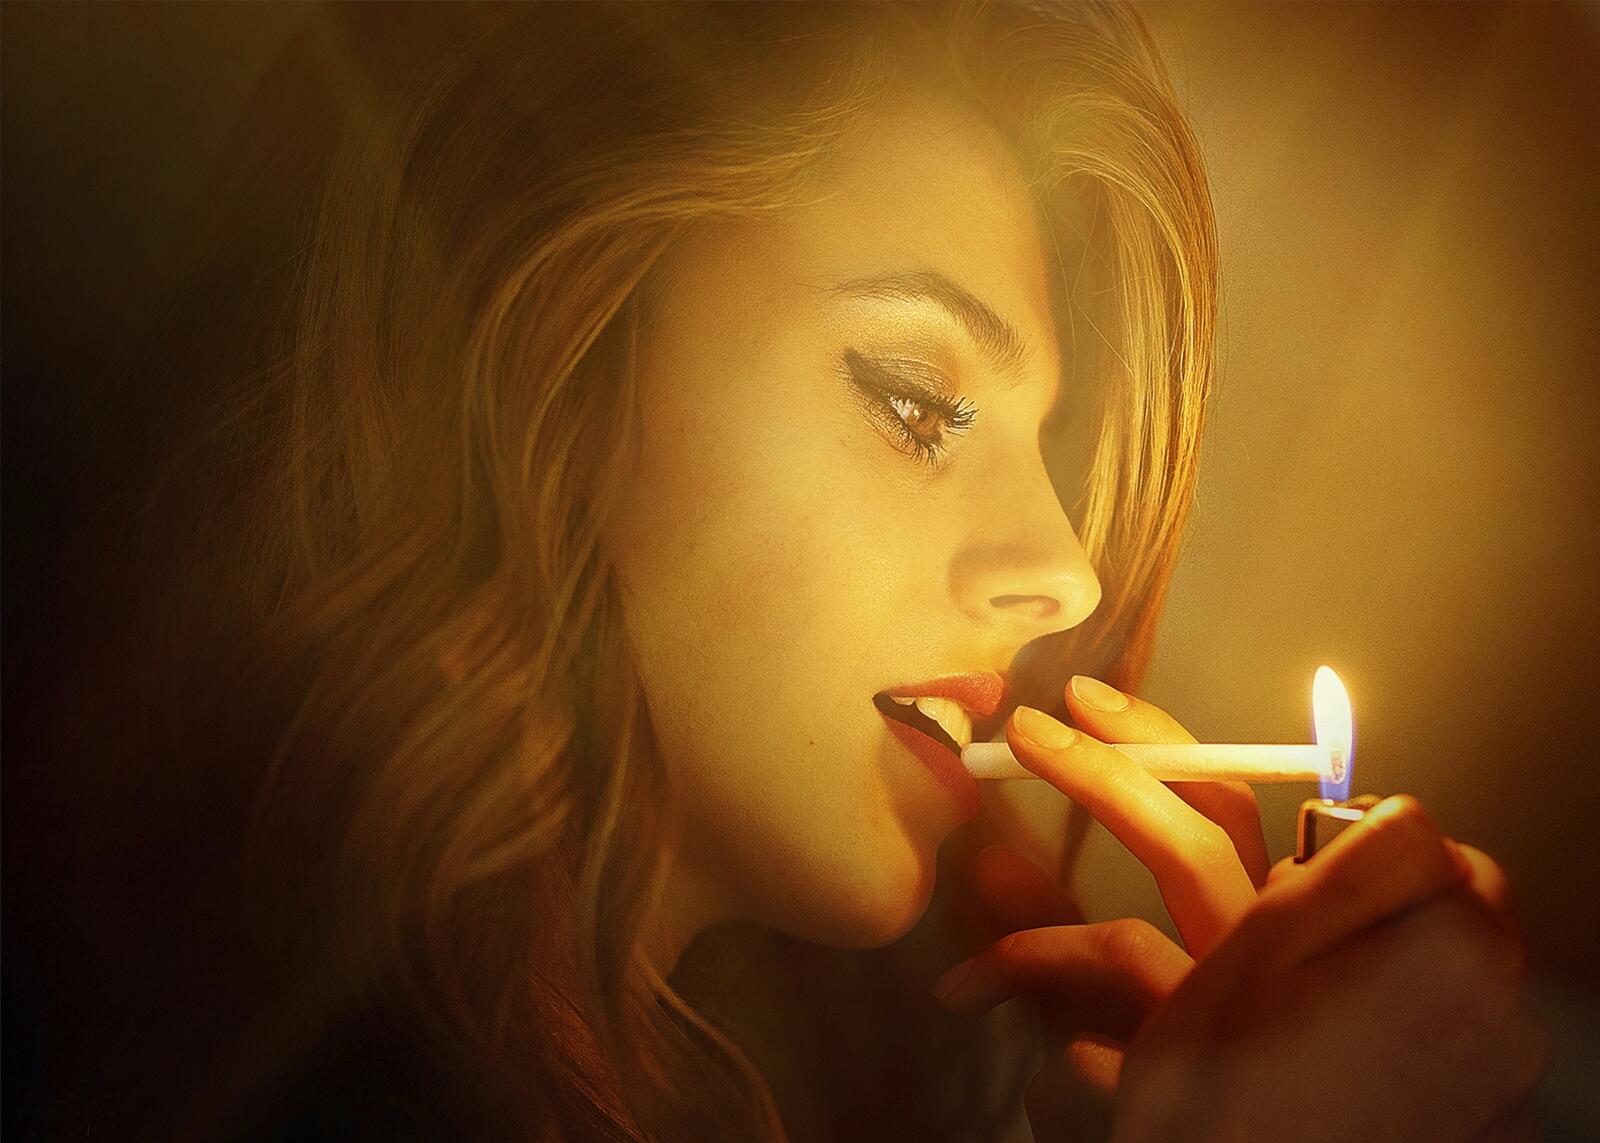 Бесплатное фото Девушка прикуривает сигарету